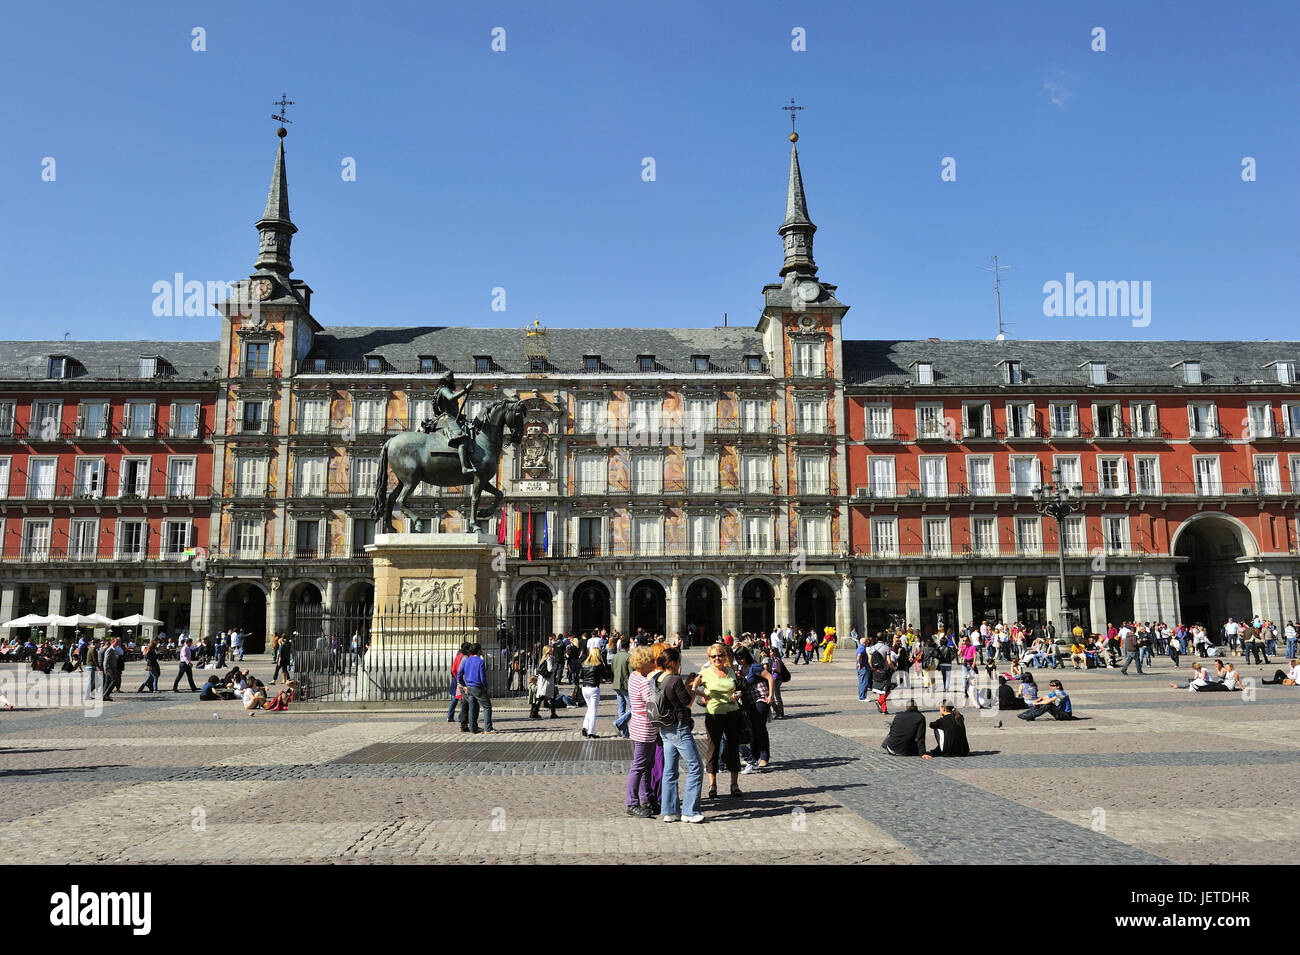 Spain, Madrid, plaza Mayor, Equestrian statue, Felipe III, many people, Stock Photo